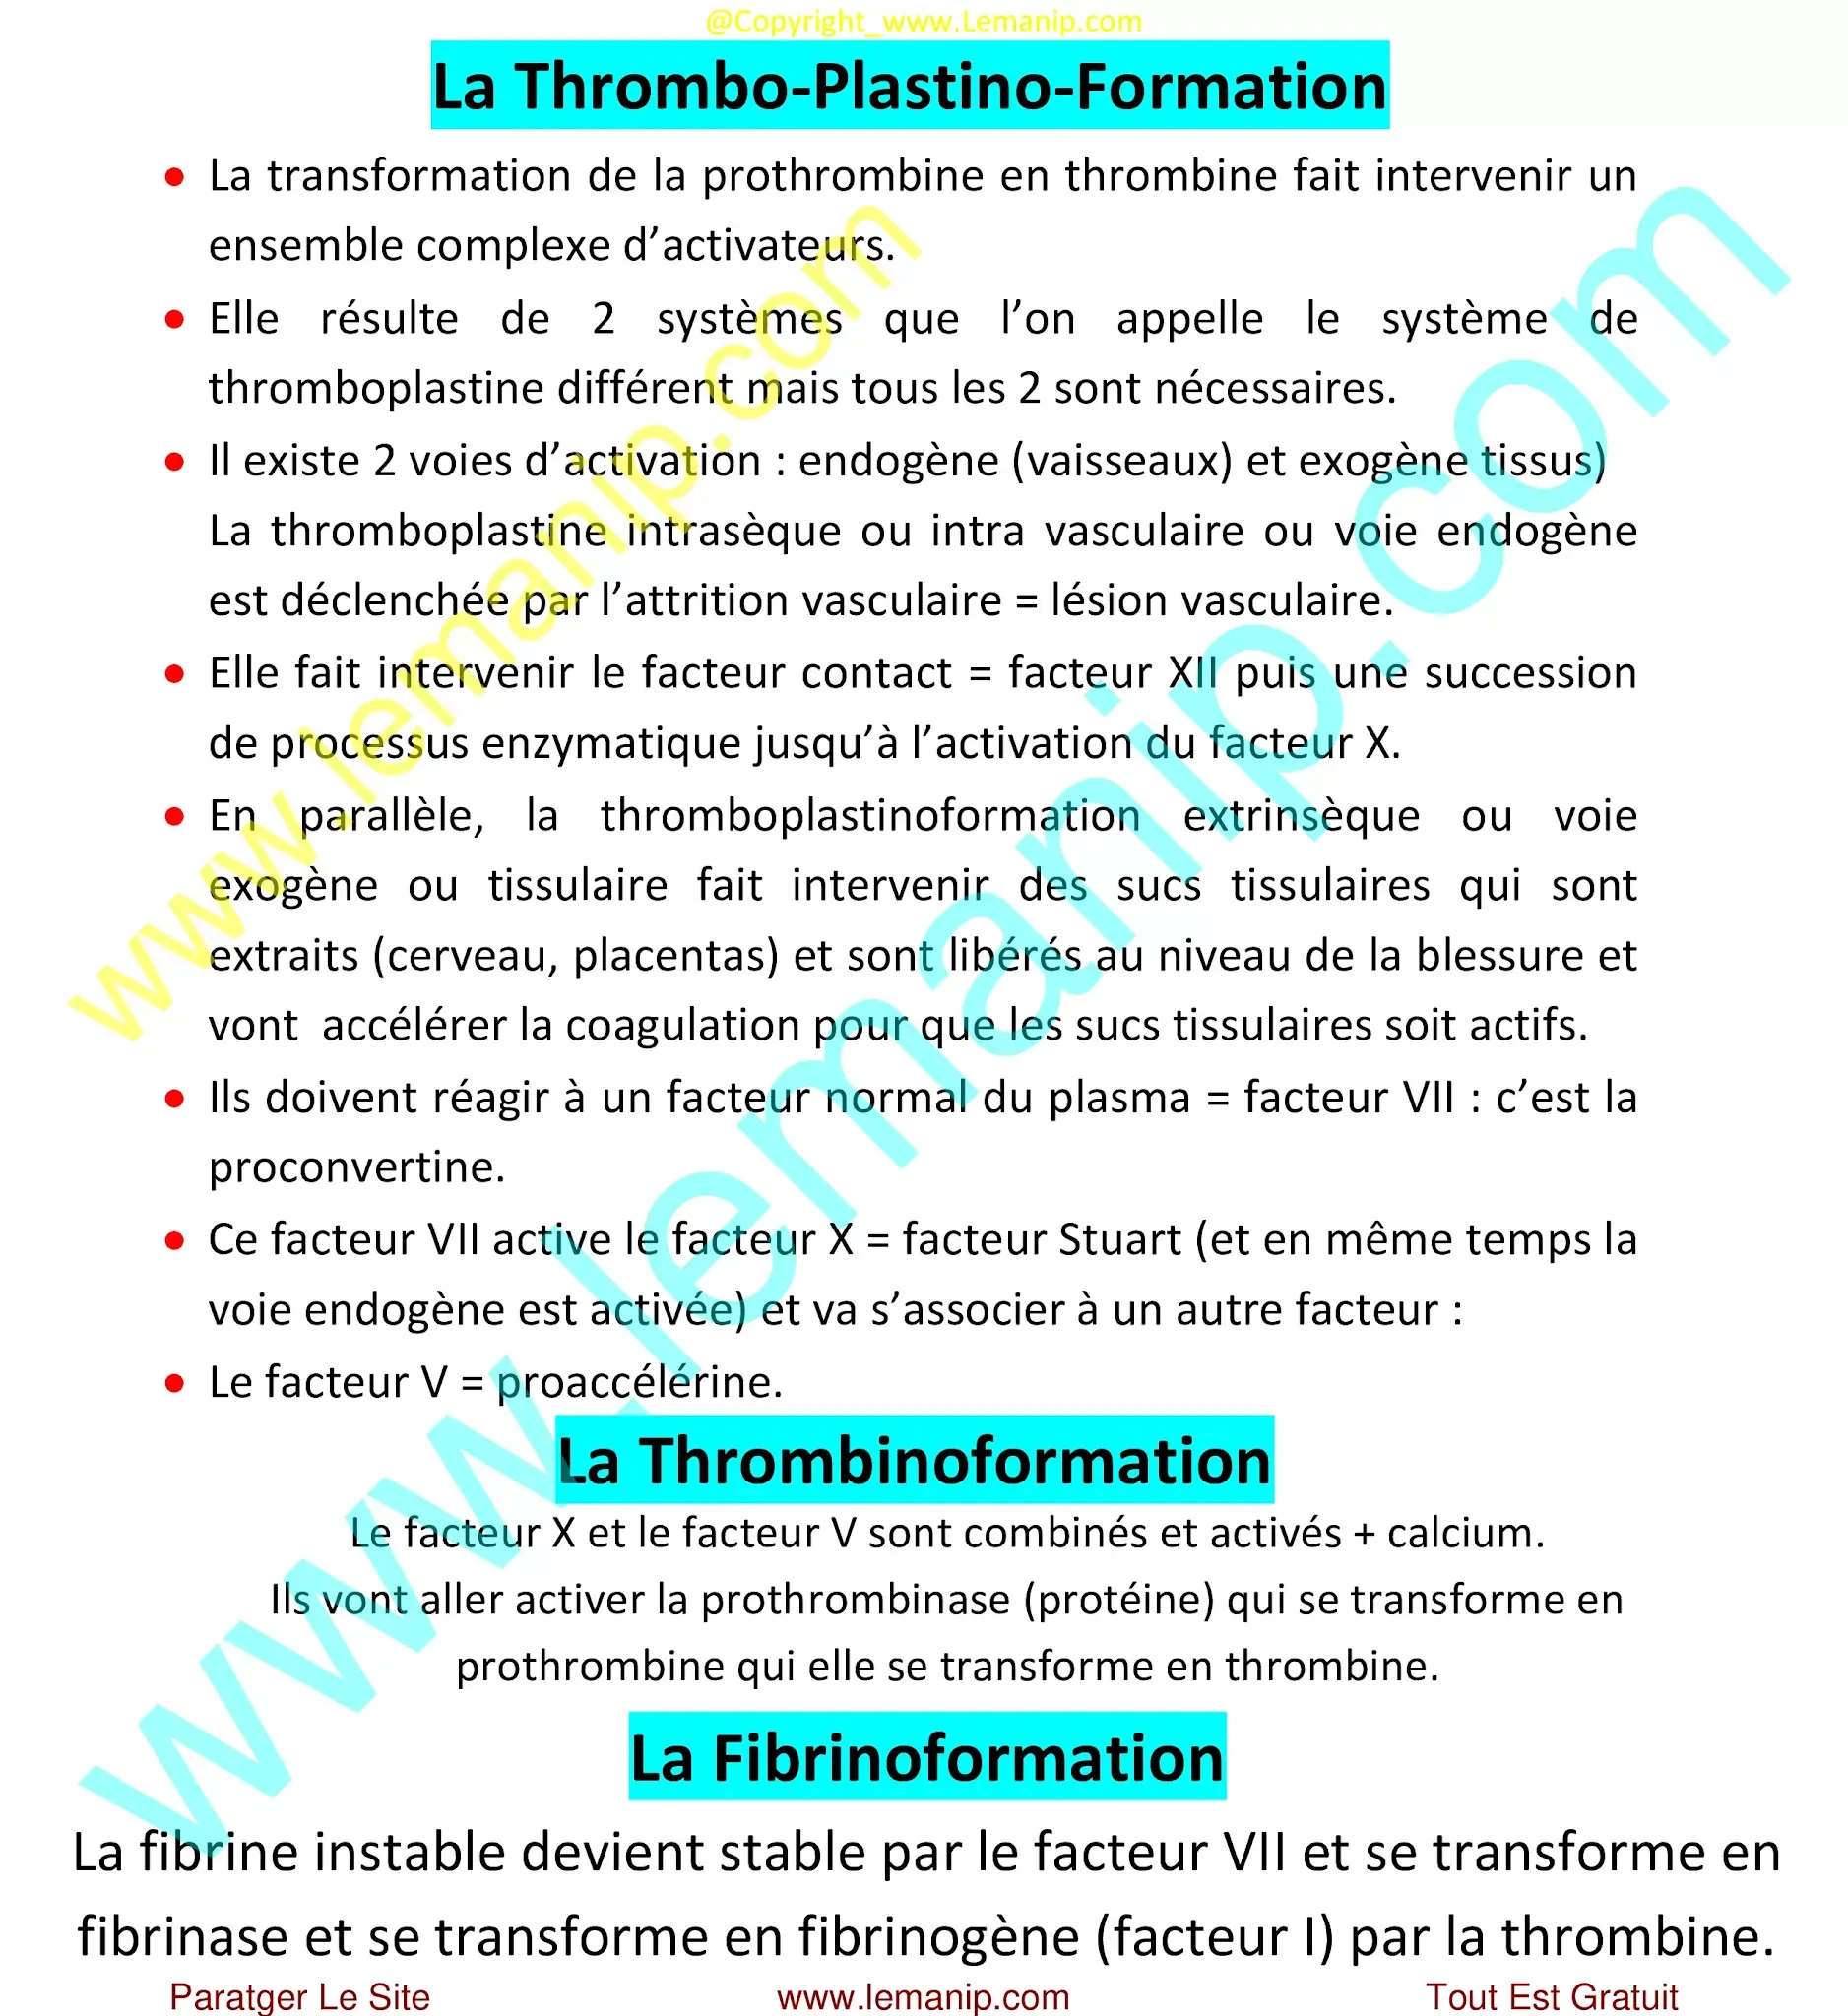 Thrombo-Plastino-Formation, Thrombinoformation et Fibrinoformation